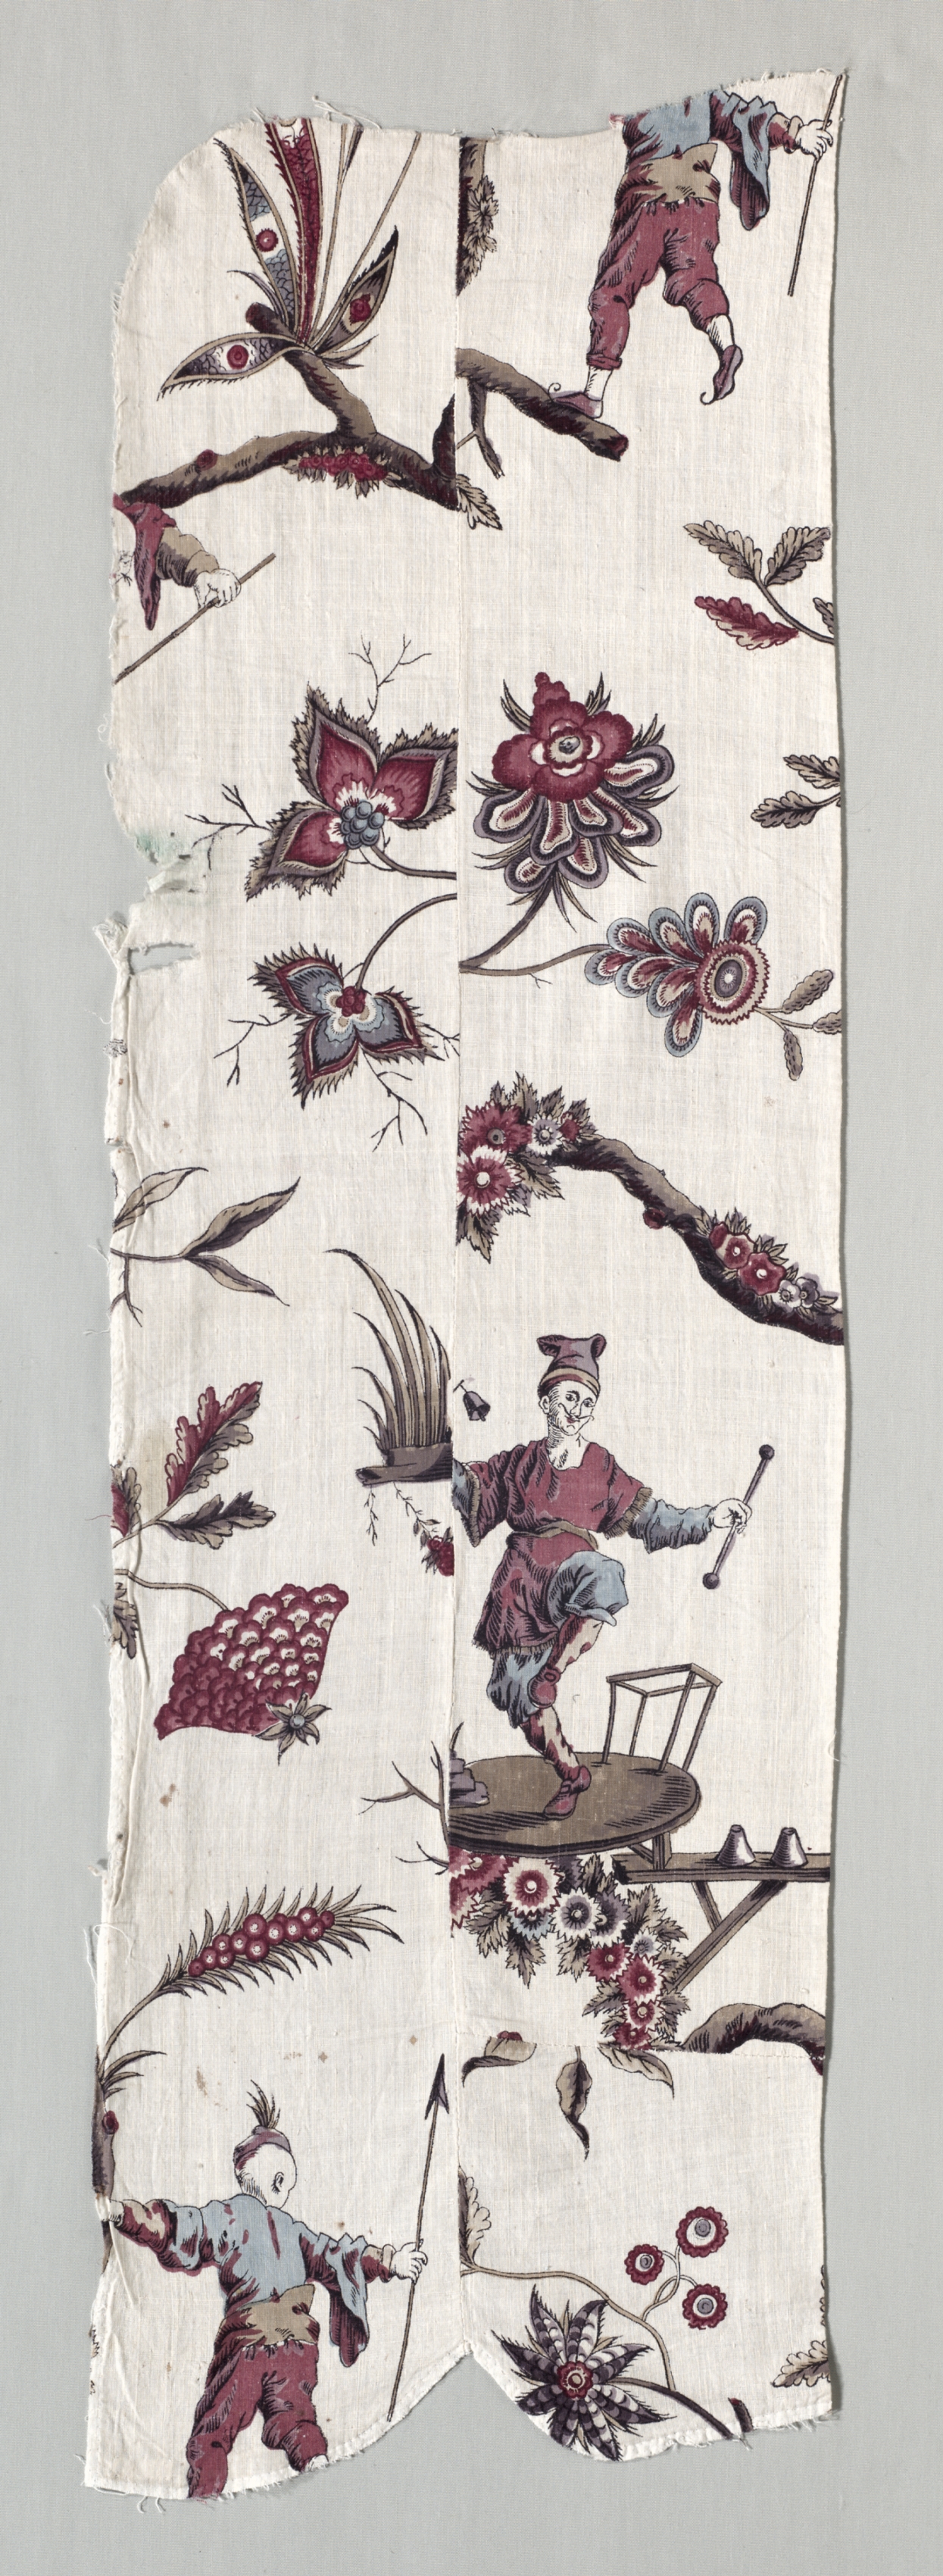 Woodblock Printed Textile Fragments